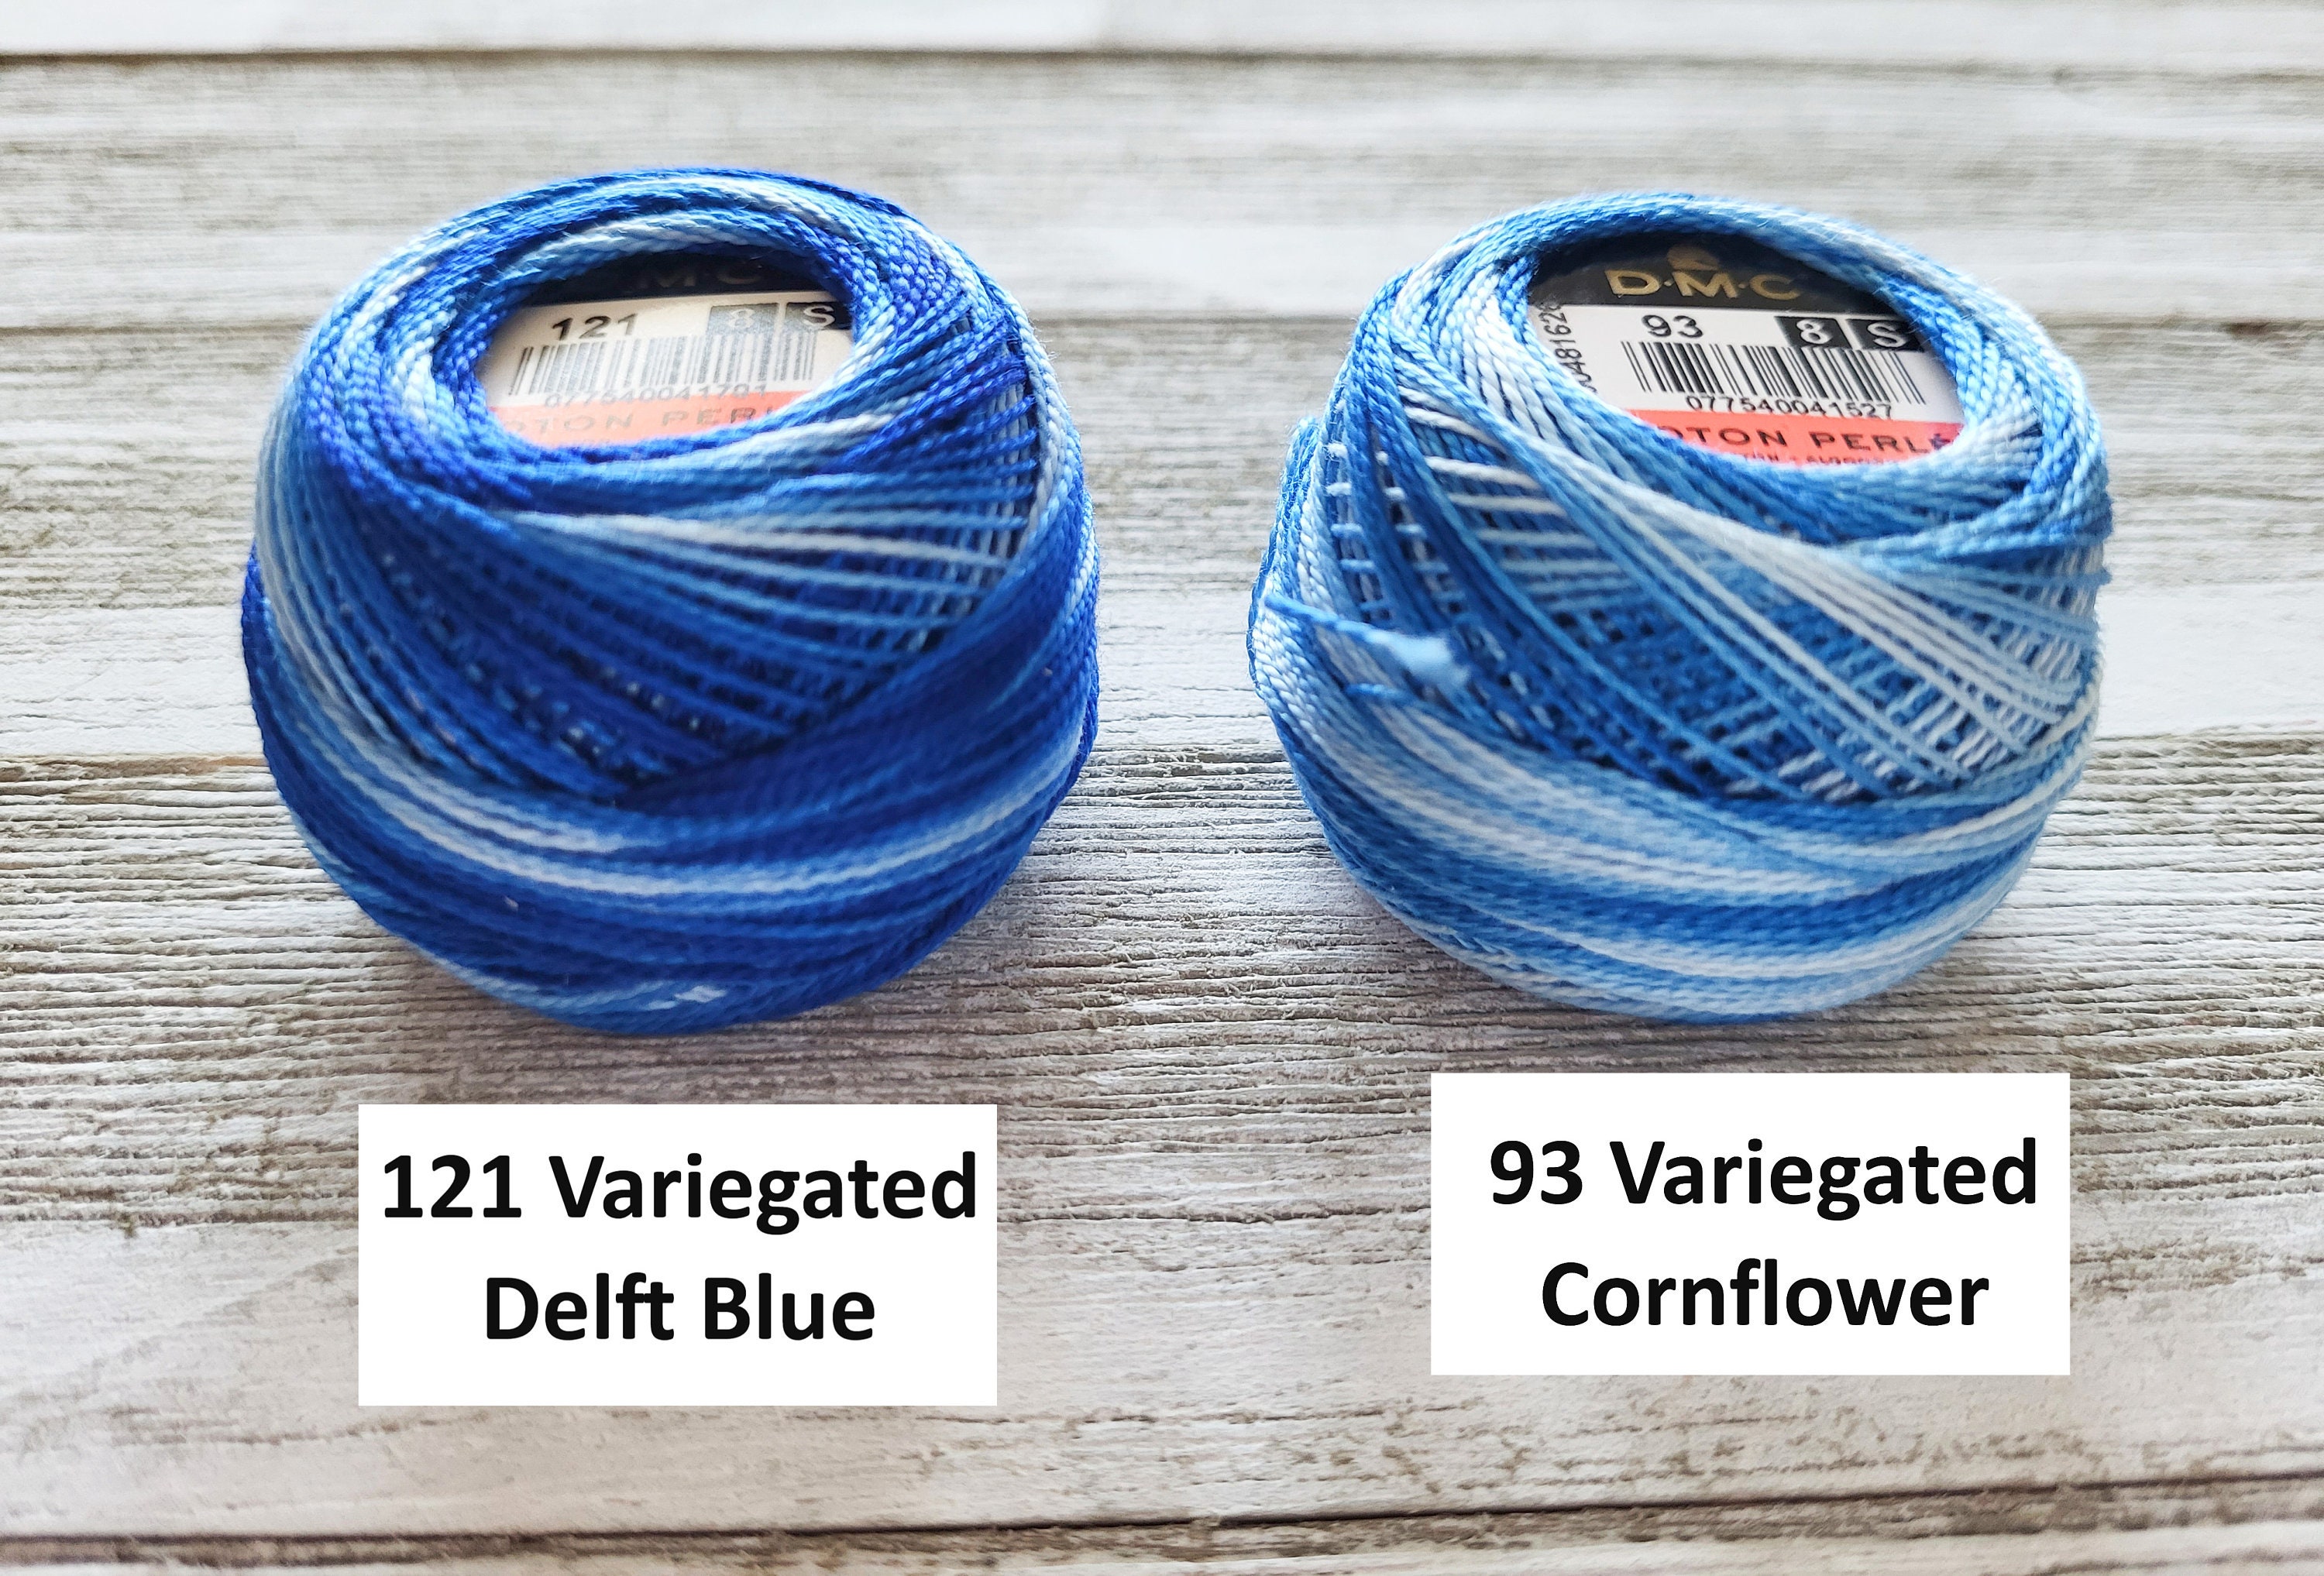 DMC Size8 Perle Cotton Thread 103 Variegated Dark Royal Blue